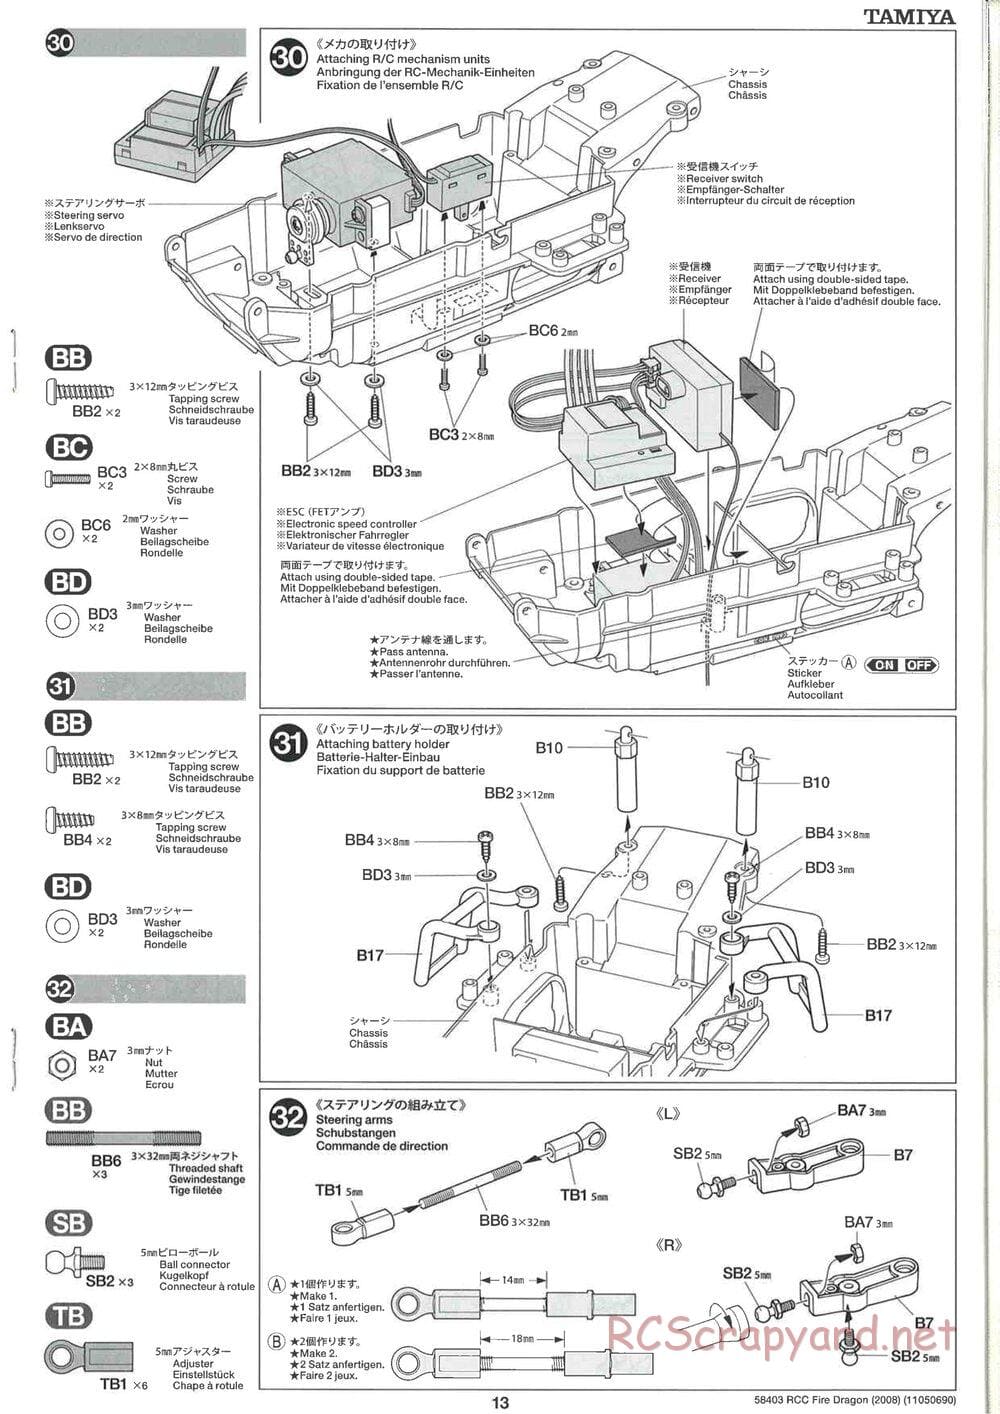 Tamiya - Fire Dragon 2008 - TS2 Chassis - Manual - Page 13